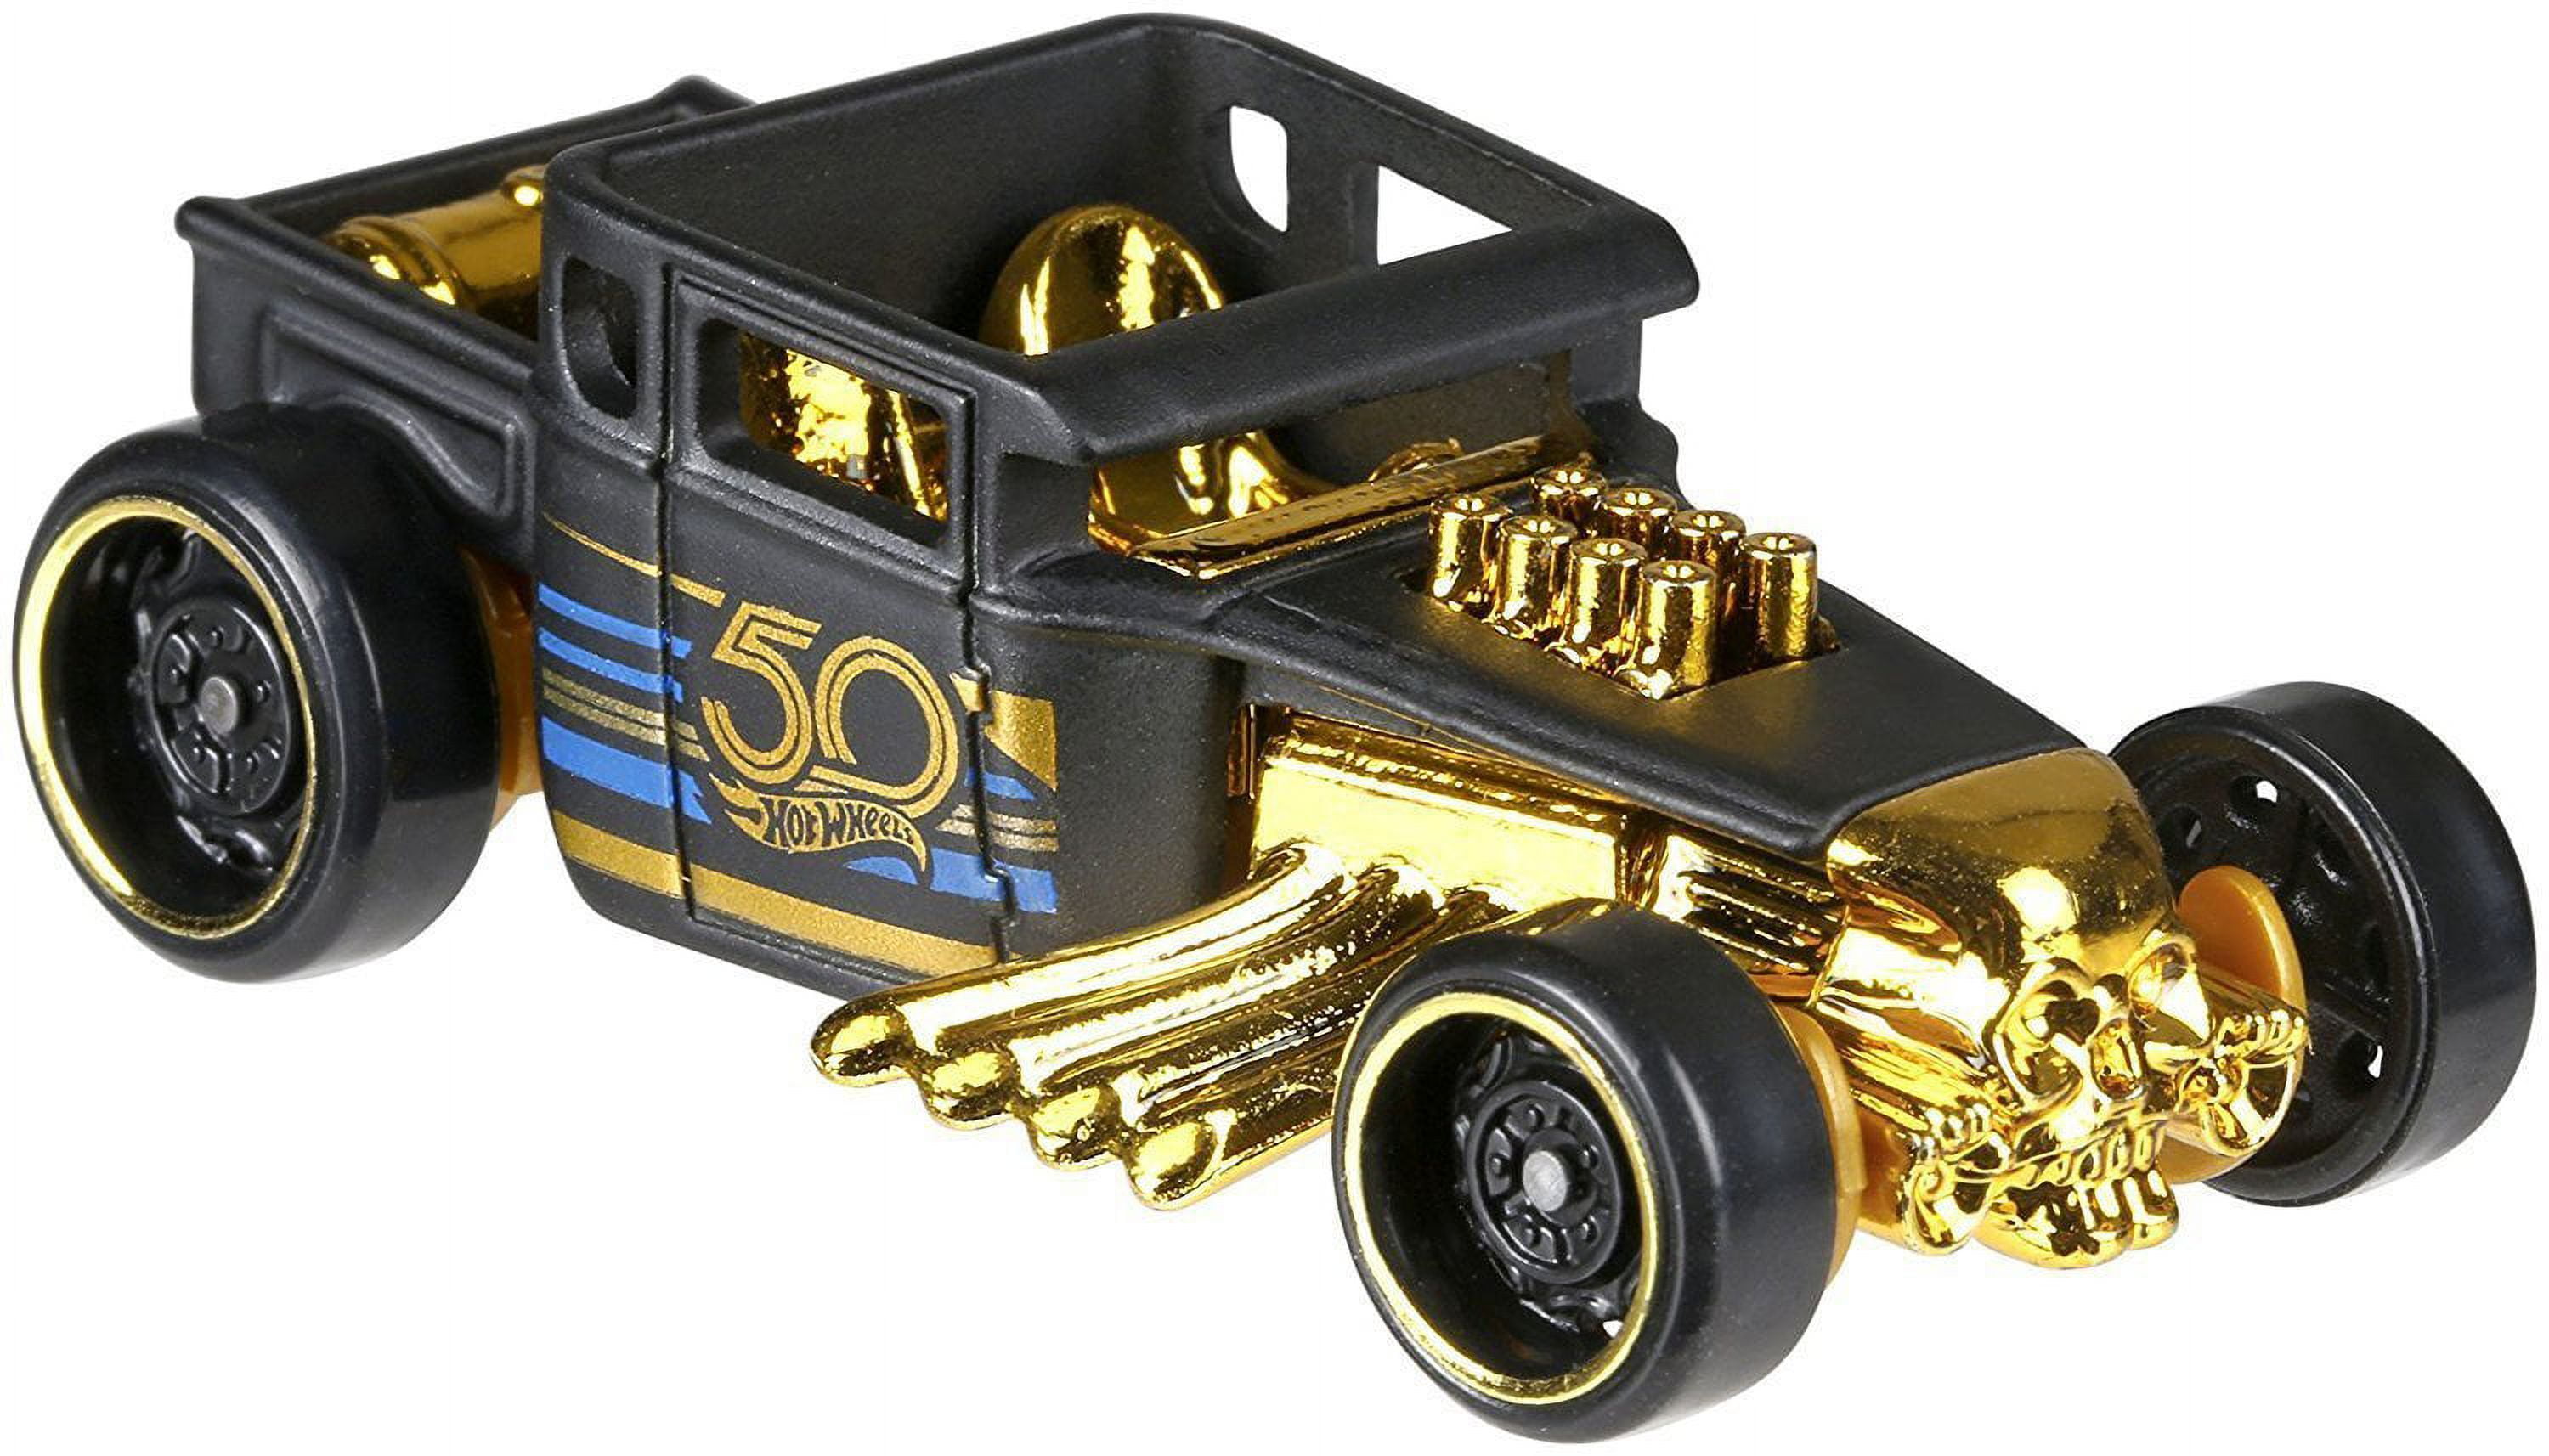 Hot wheels цена. Машинка hot Wheels Bone Shaker. Hot Wheels 50th Anniversary Black Gold. Hot Wheels 50th Black Gold. Машинка hot Wheels Bone Shaker Gold коллекционная.